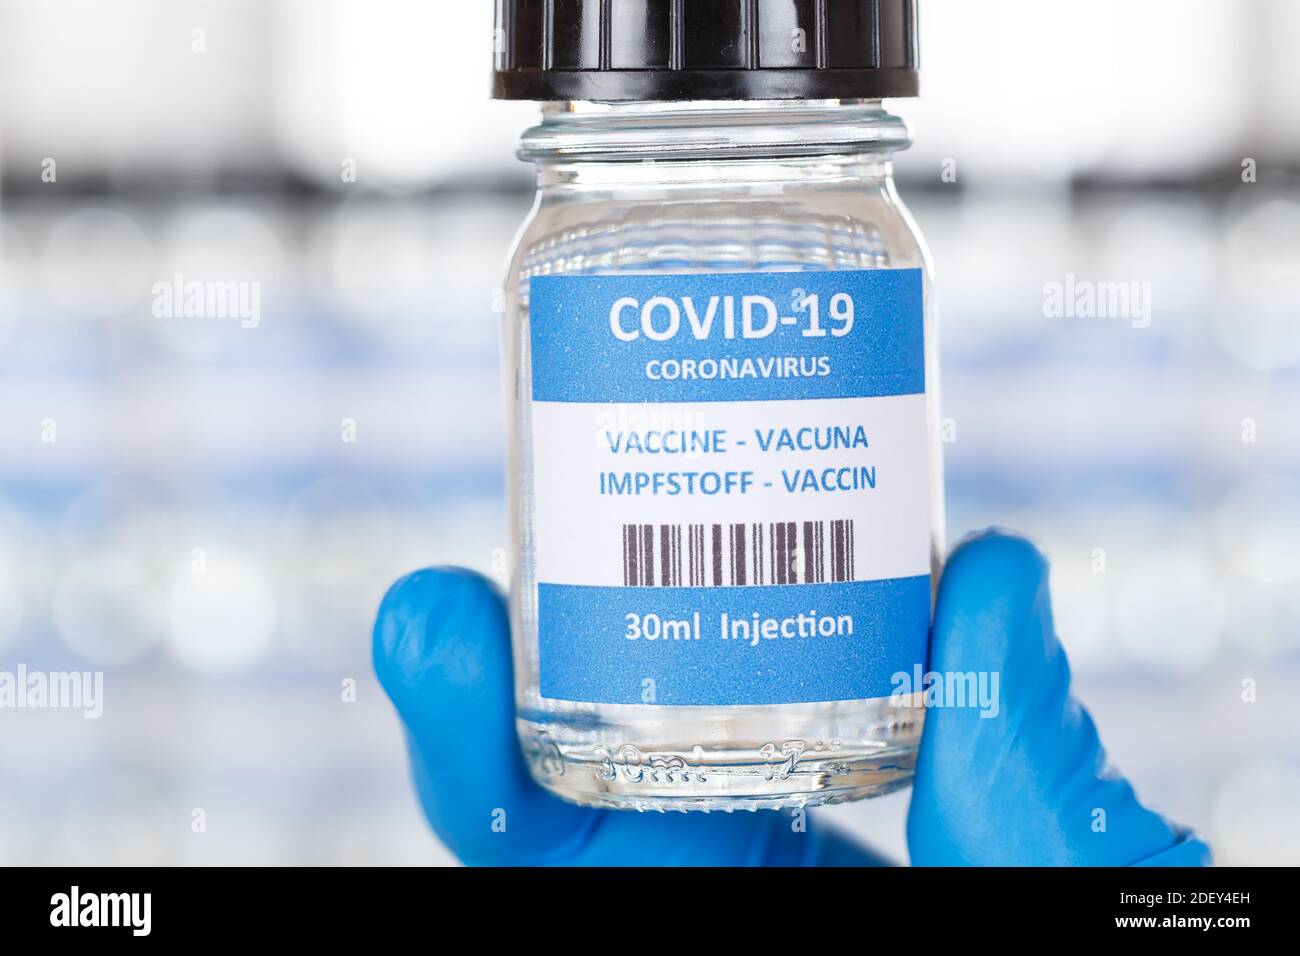 Coronavirus Vaccine bottle Corona Virus COVID-19 Covid vaccines bottles Stock Photo